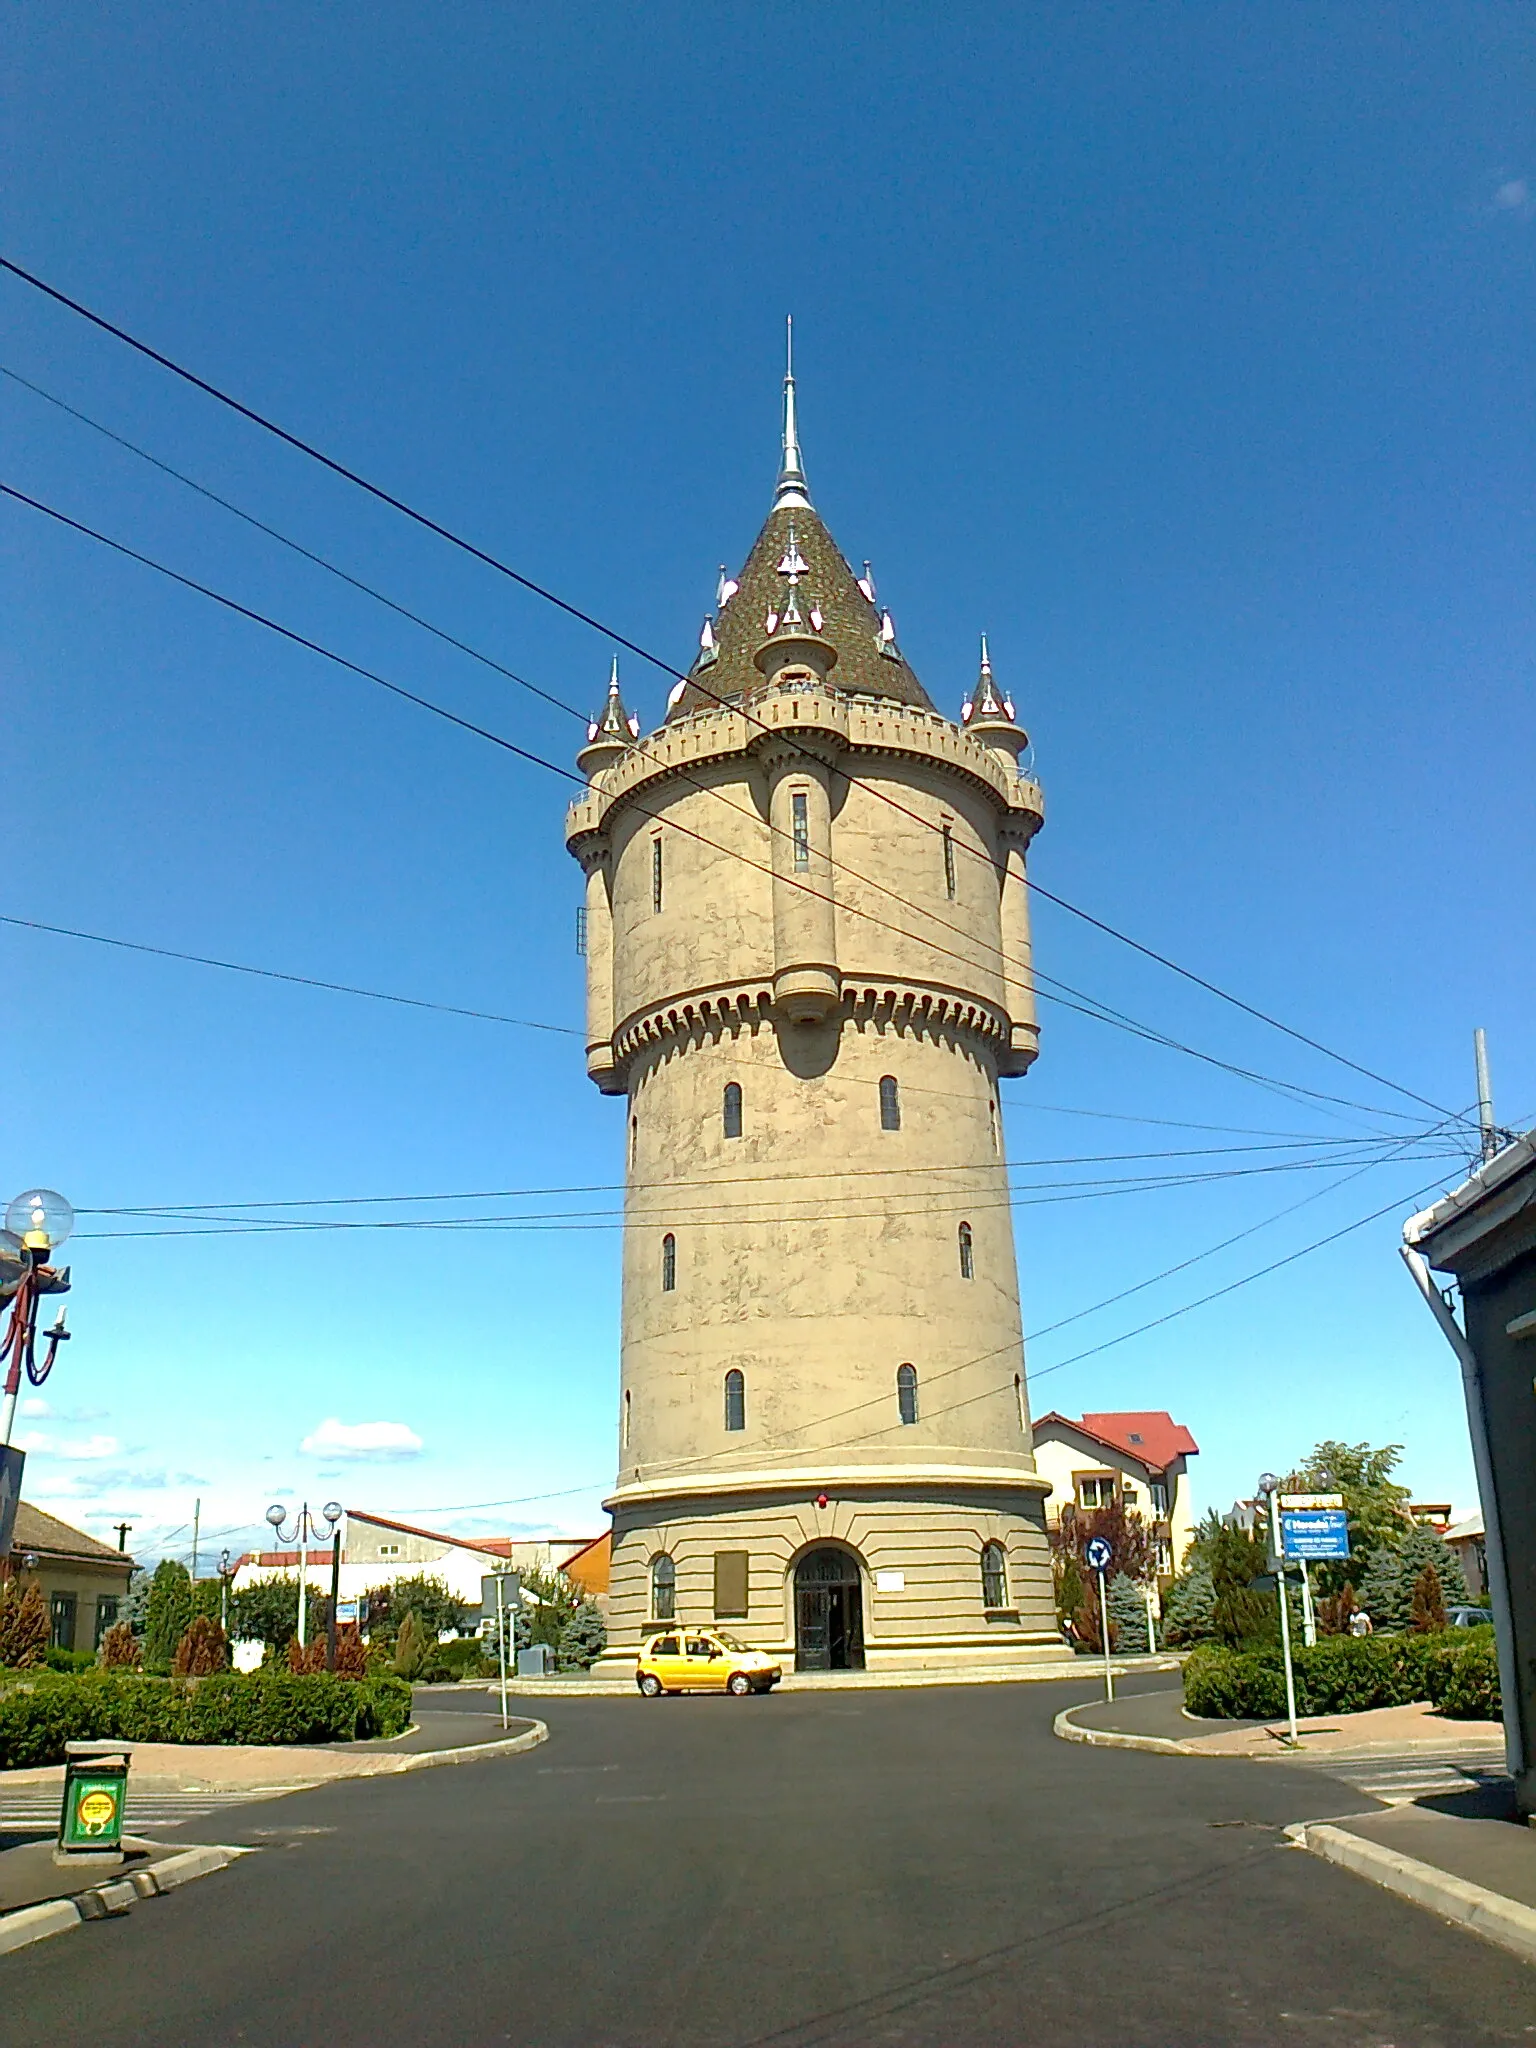 Photo showing: The Water Tower of Drobeta-Turnu Severin, Romania